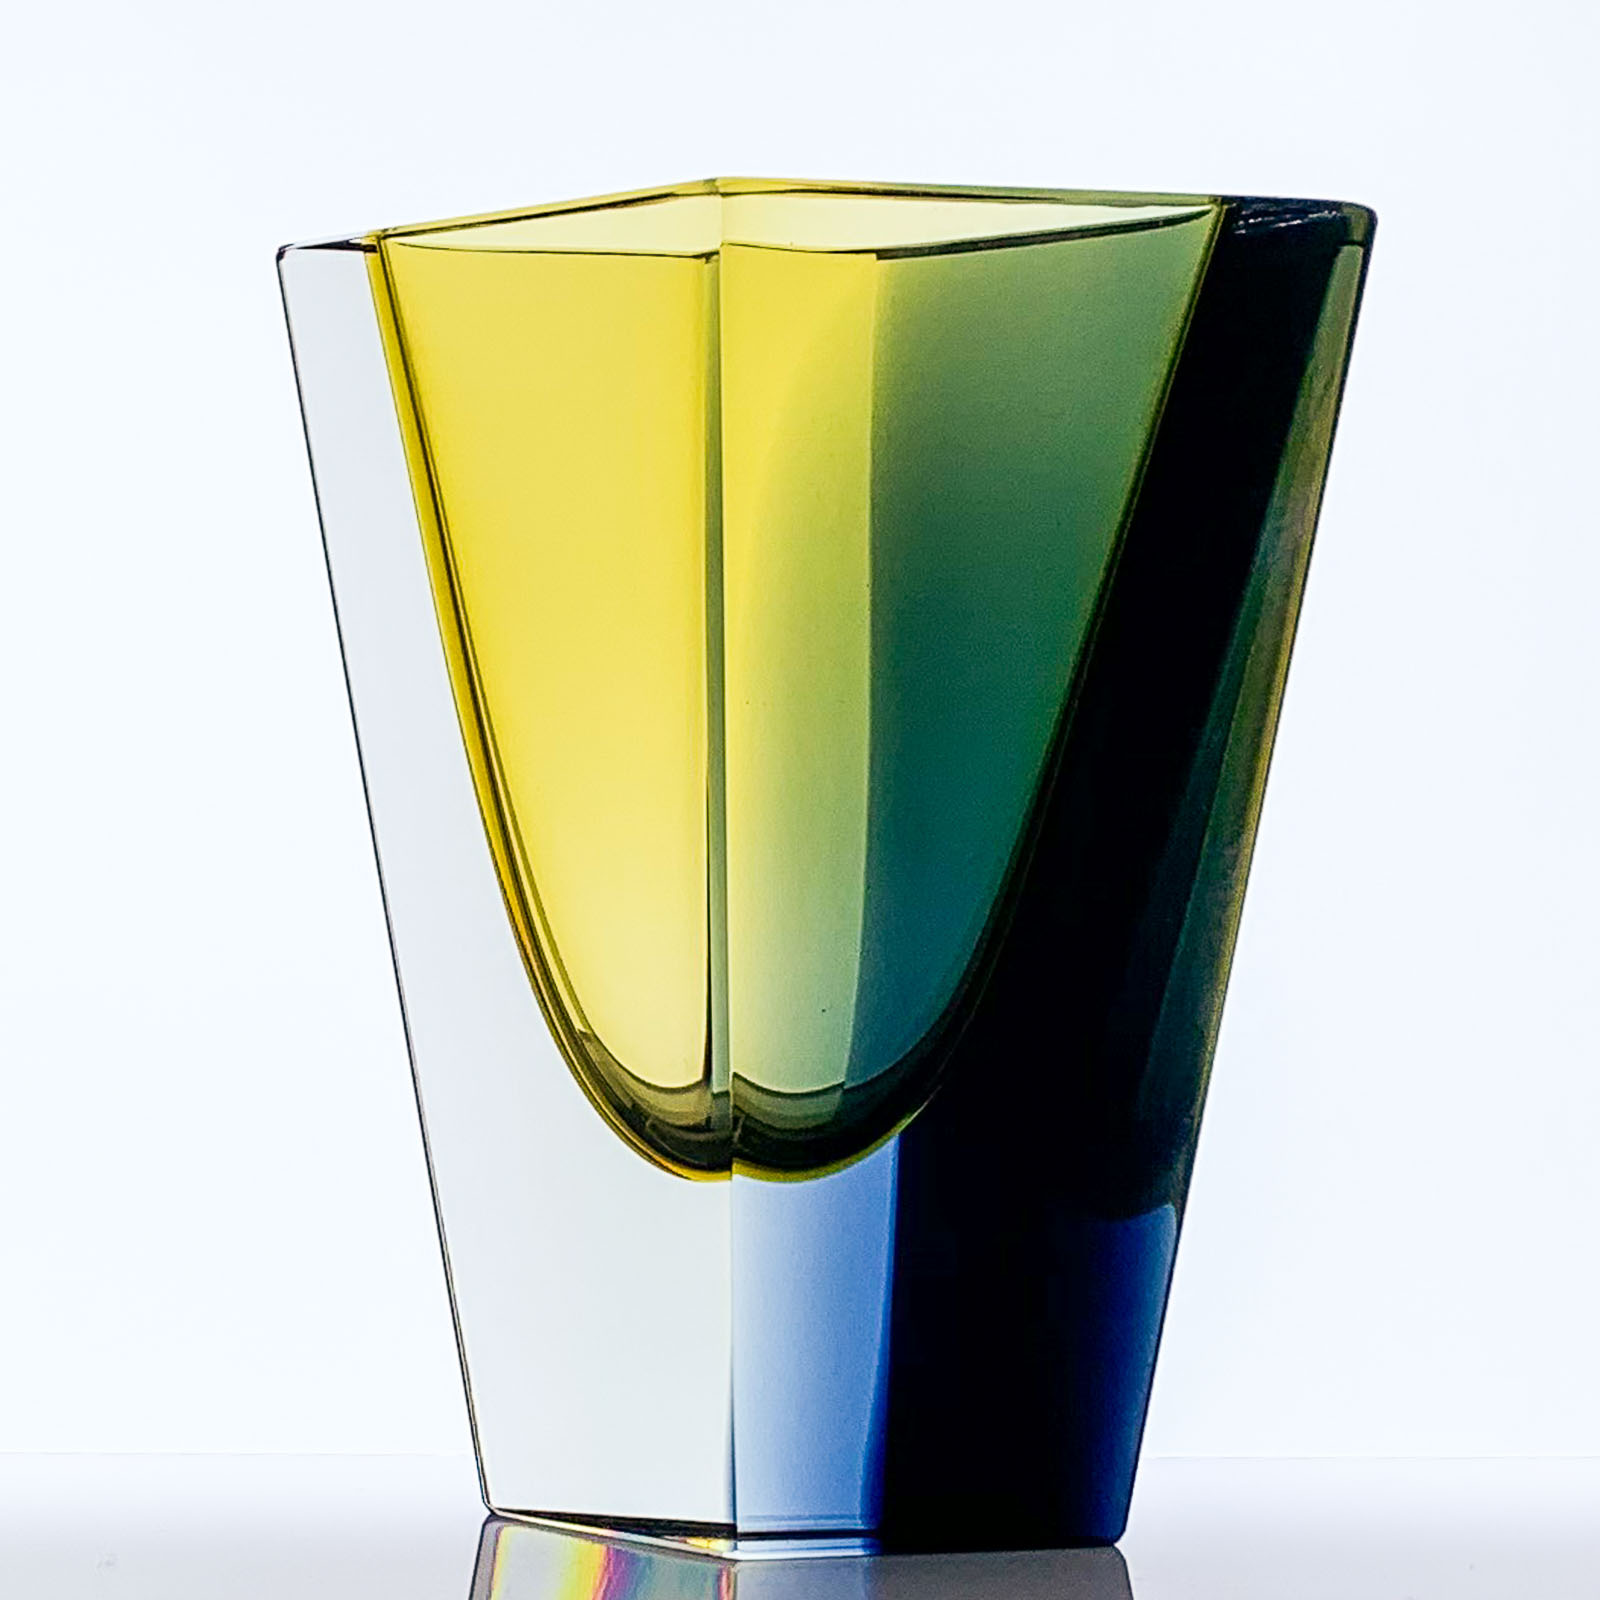 Kaj Franck - Glass Art-object "Prisma", model KF 215 - Nuutajärvi-Notsjö Finland, 1964